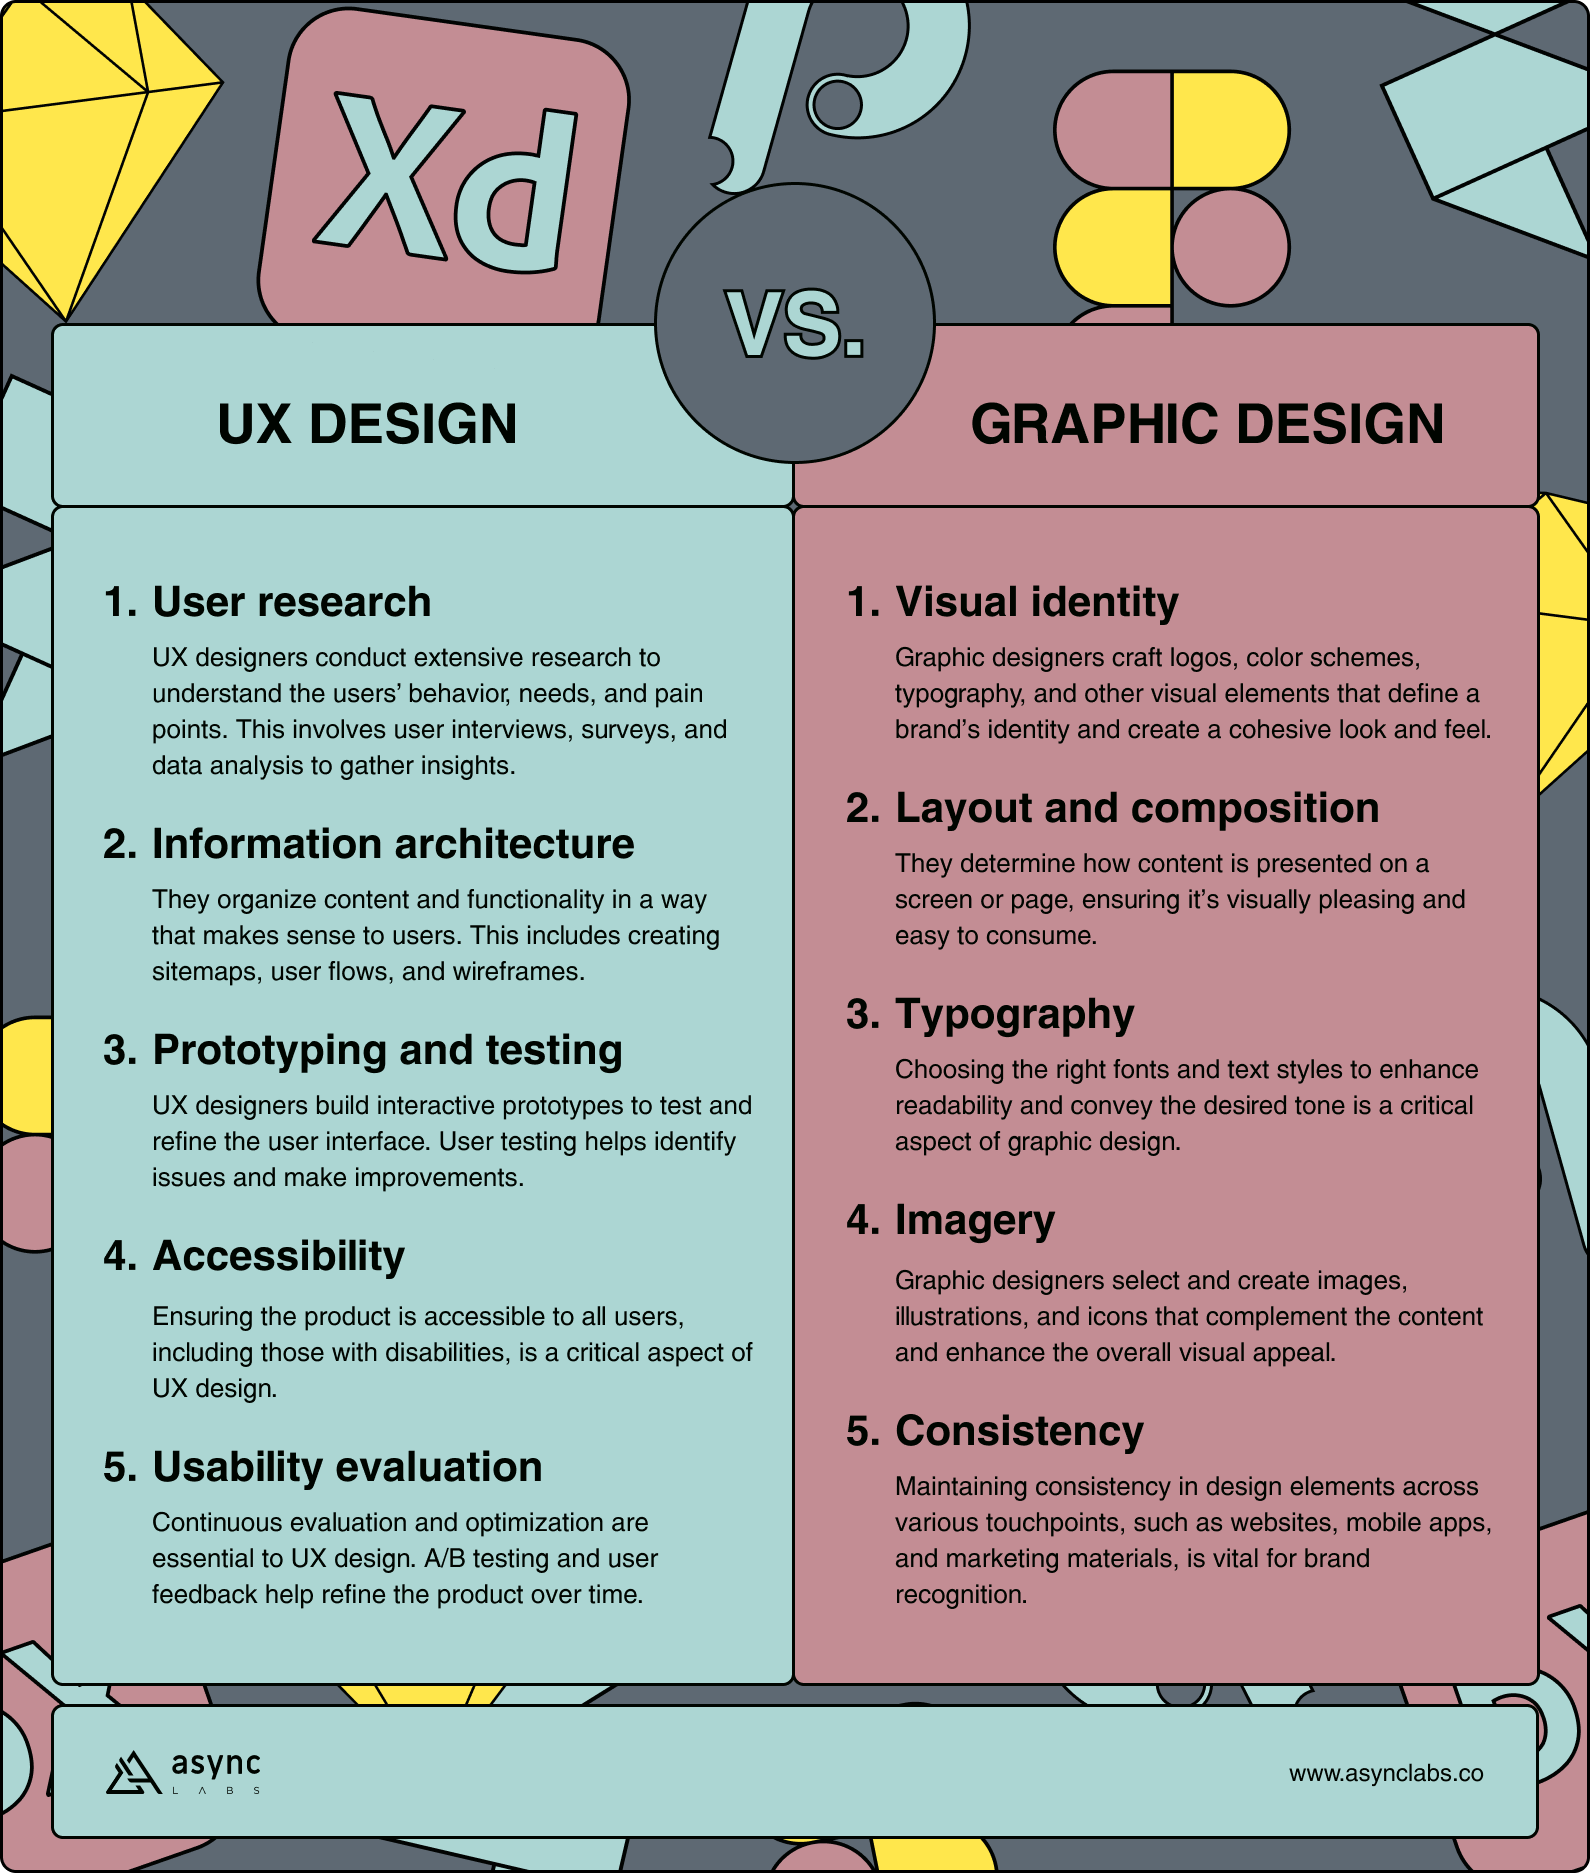 ux design vs graphic design